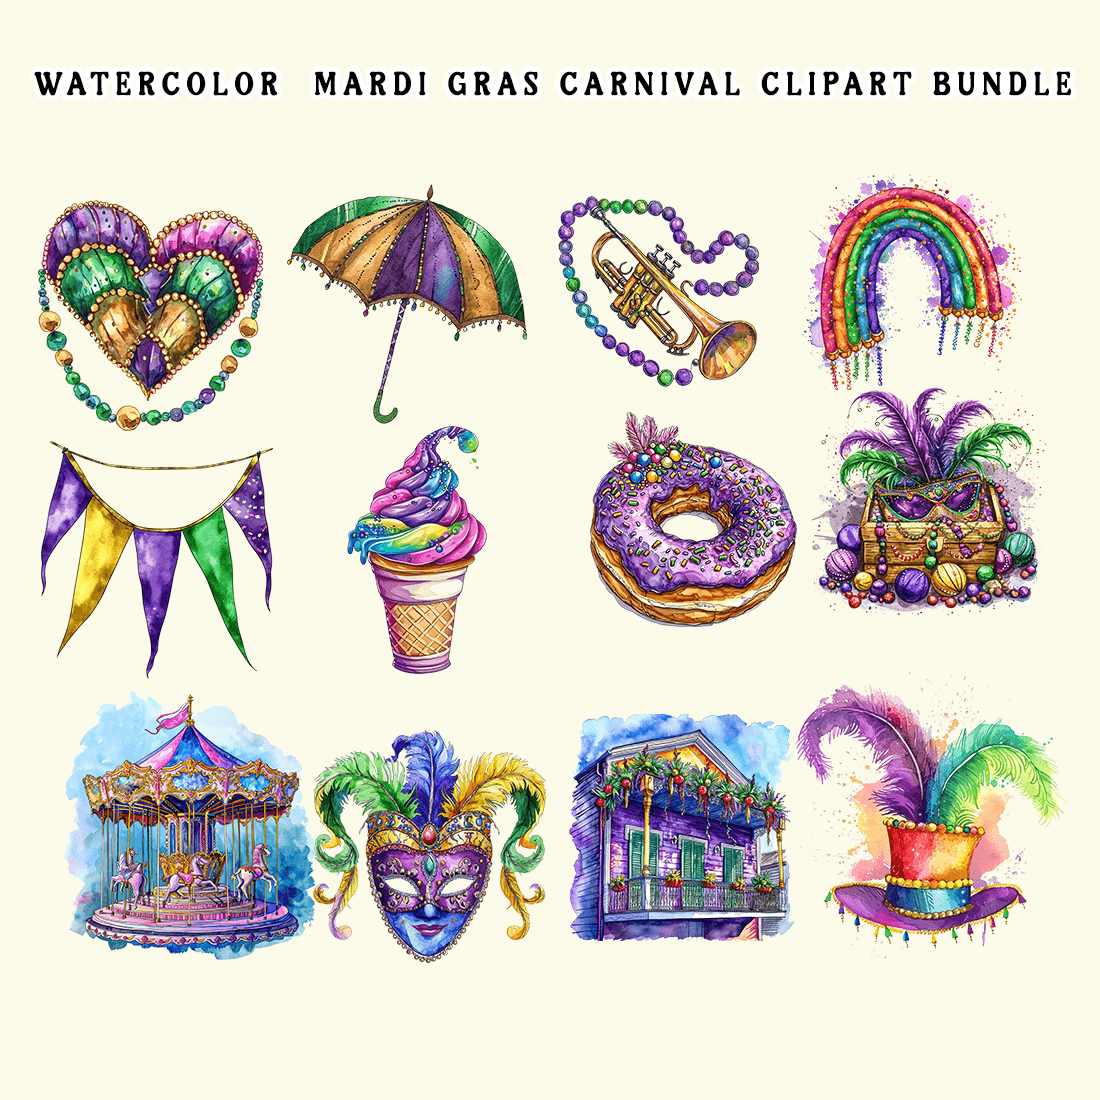 Watercolor Mardi Gras Carnival Clipart Bundle preview image.